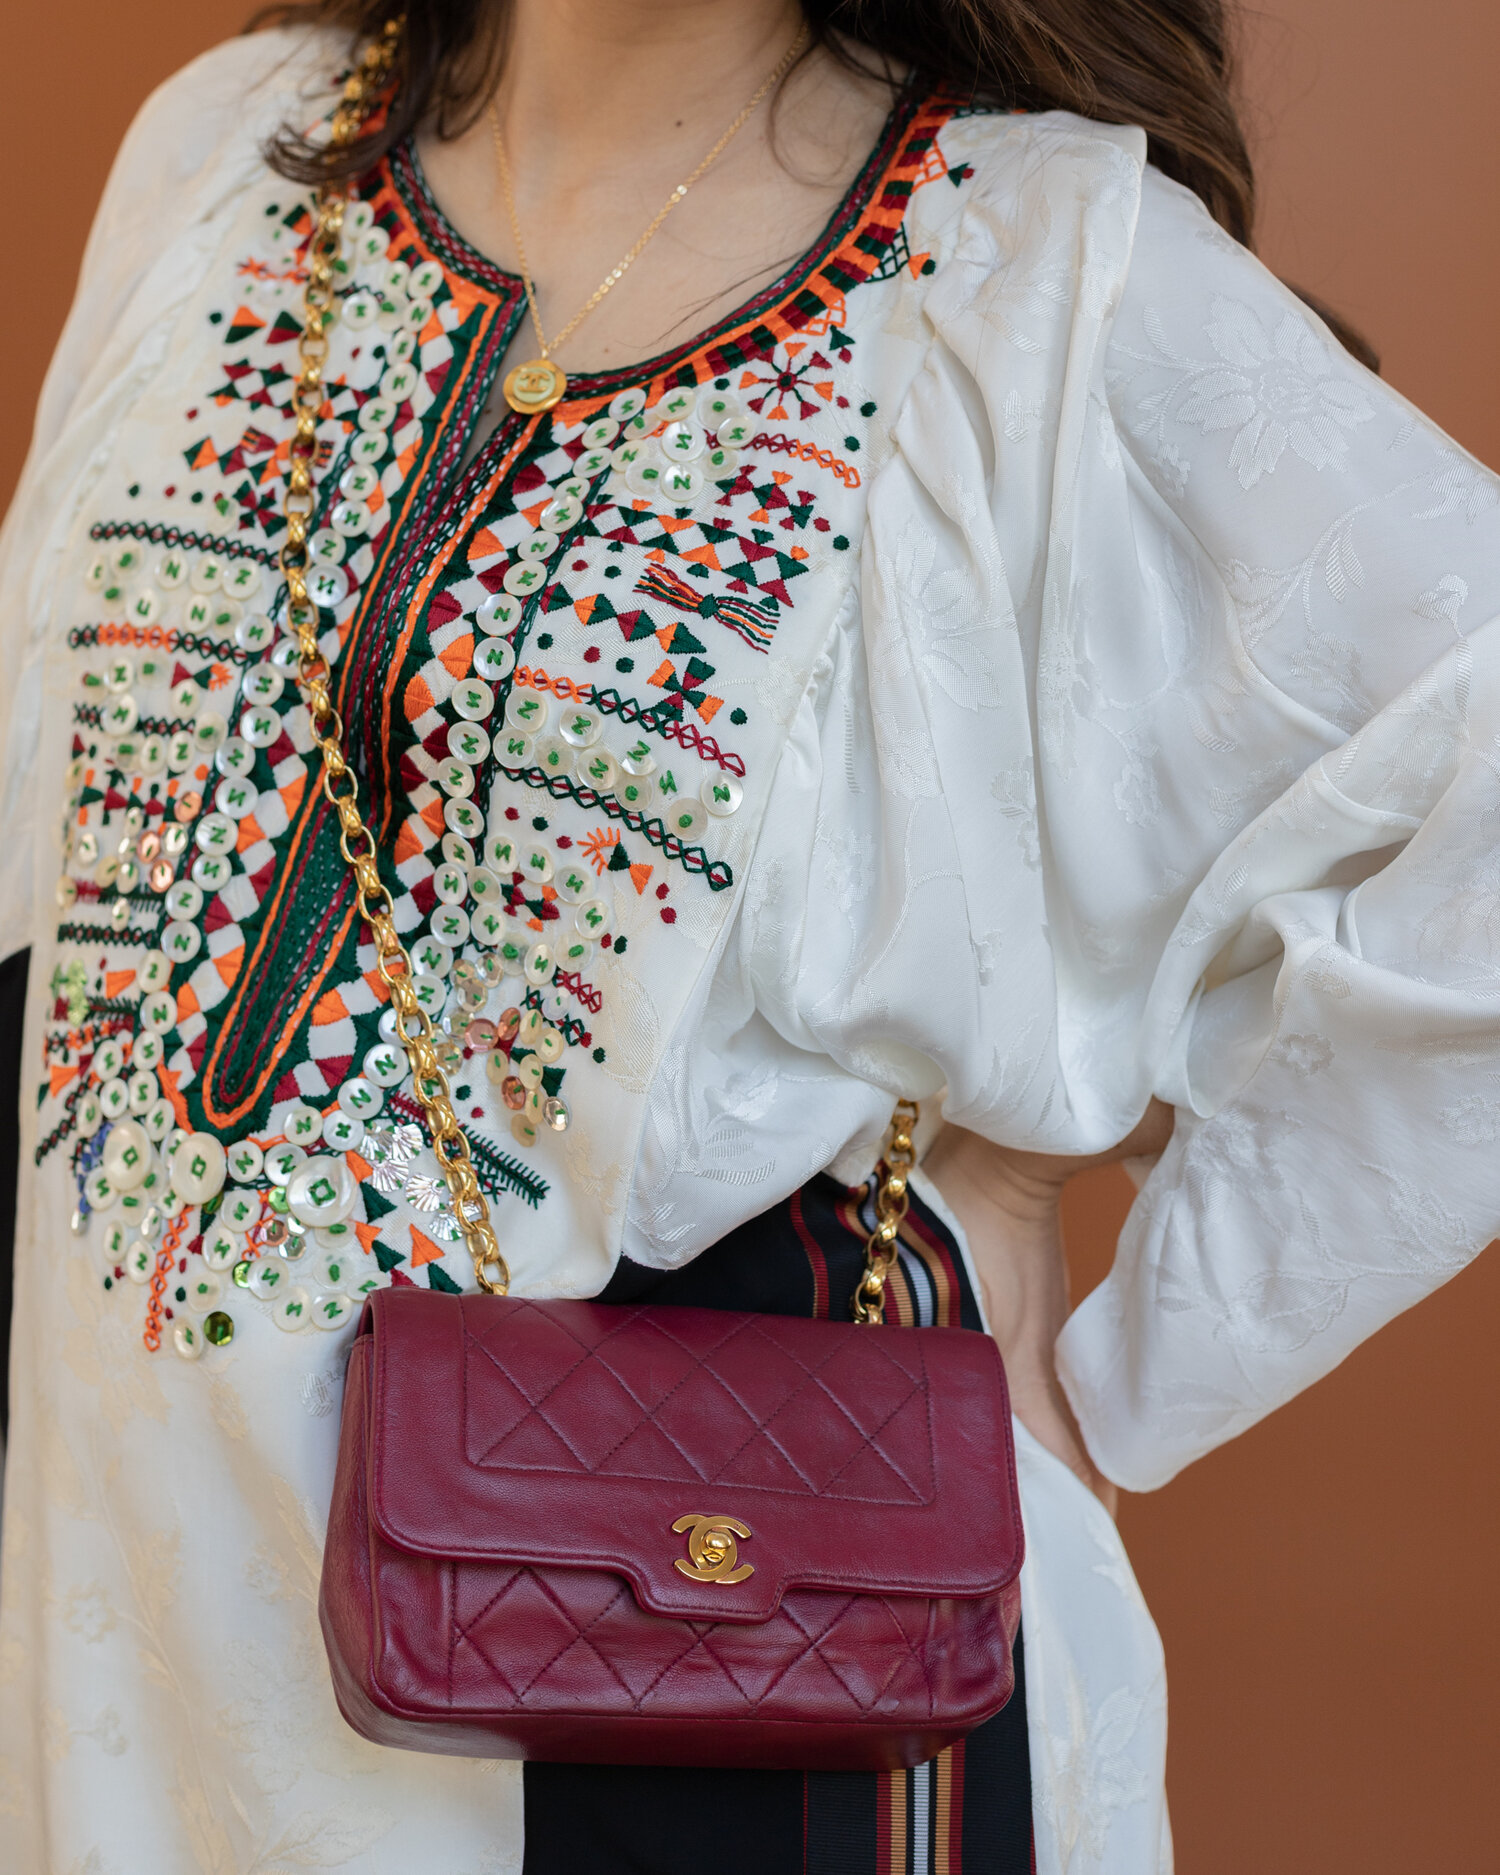 Vintage Chanel Mini Diana Bag in Dark Pink leather — singulié